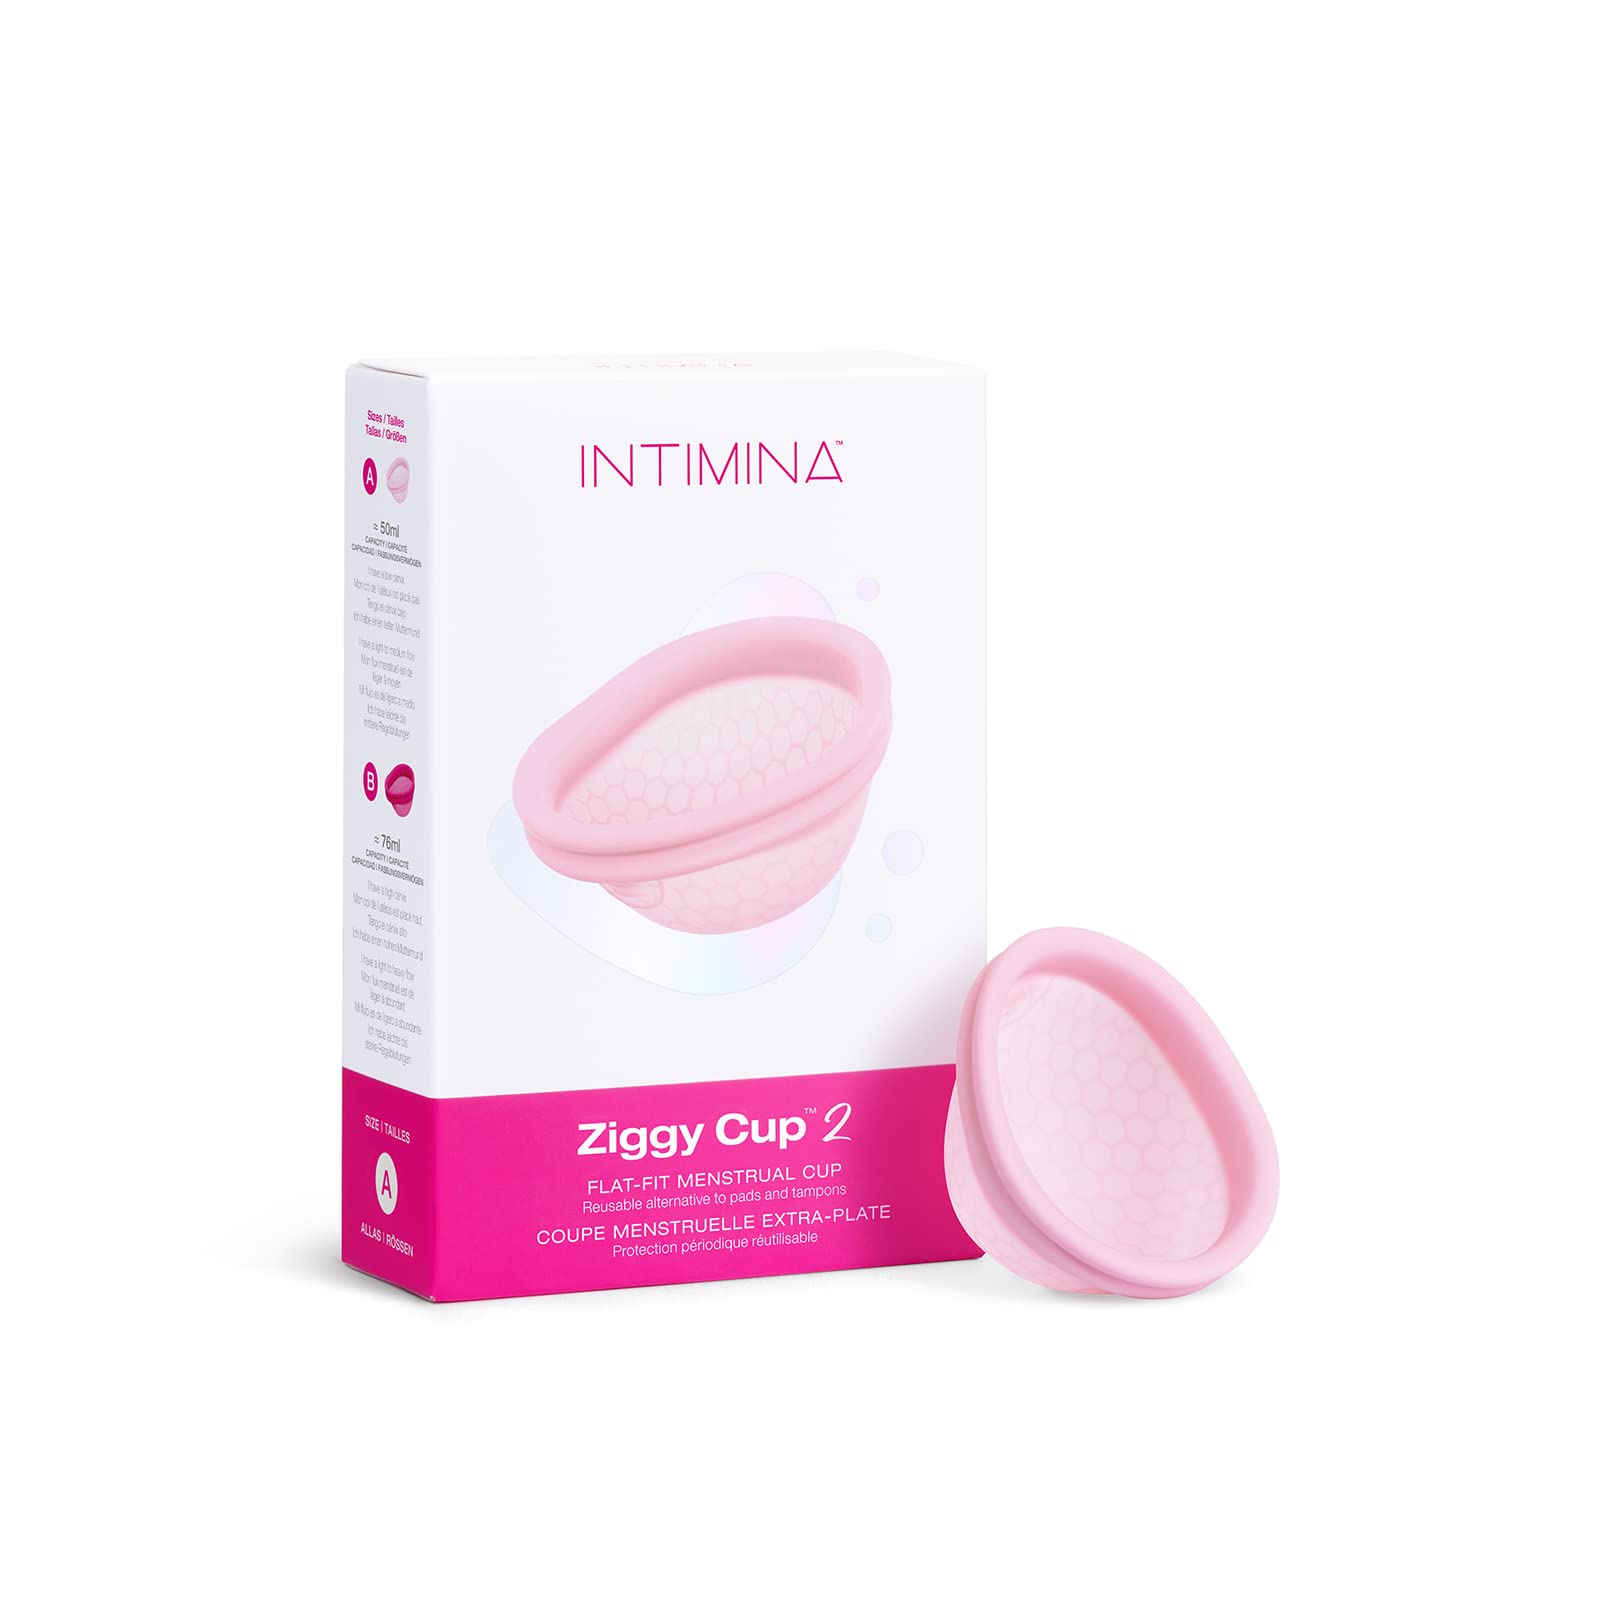 Intimina Ziggy Cup 2 New Generation Ultra Thin Flat Fit Reusable Menstrual Disc A